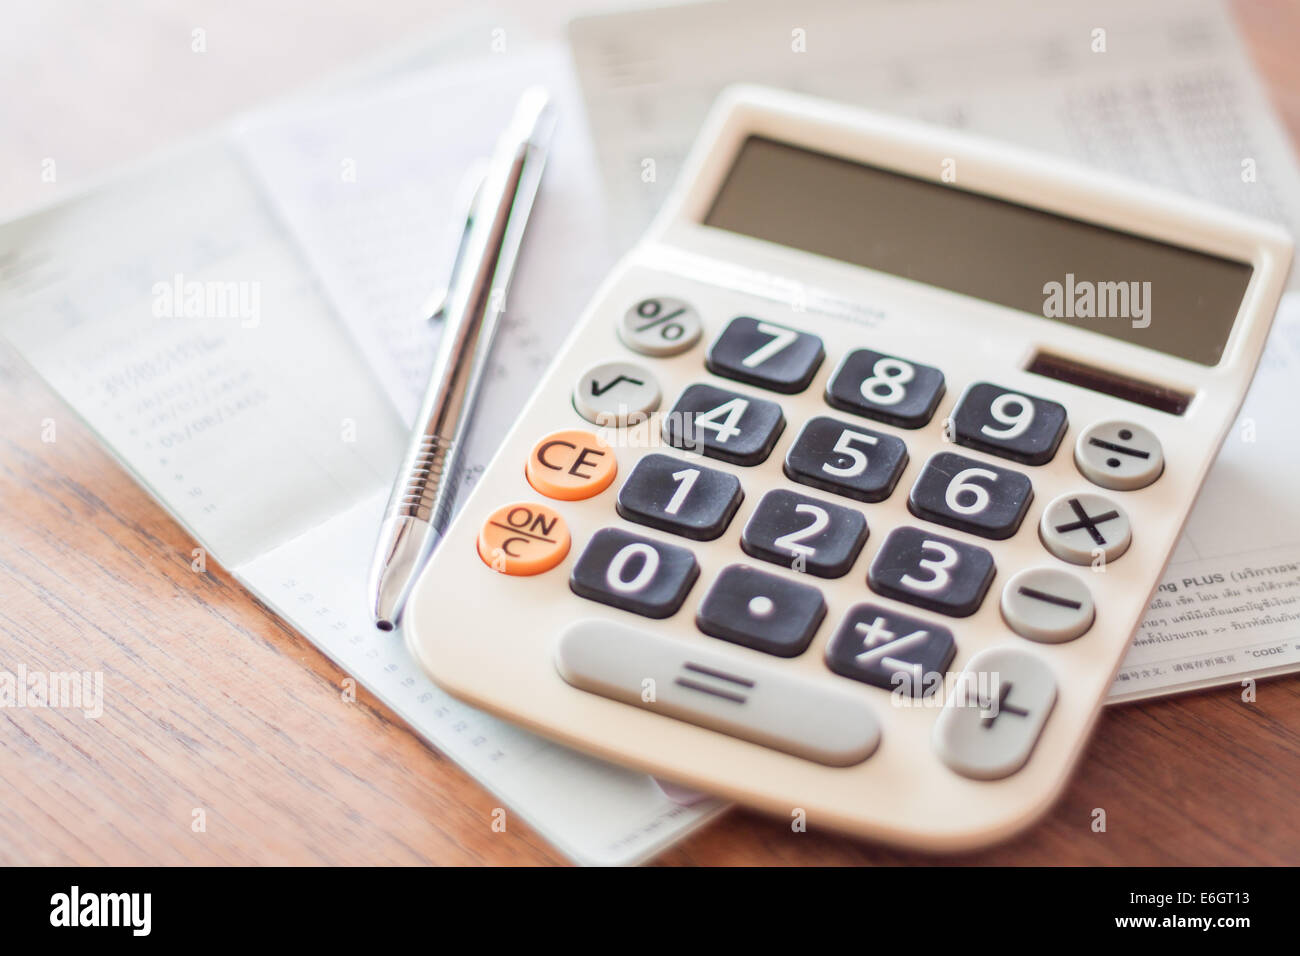 Calcolatrice e penna su conto bancario libretto, stock photo Foto Stock